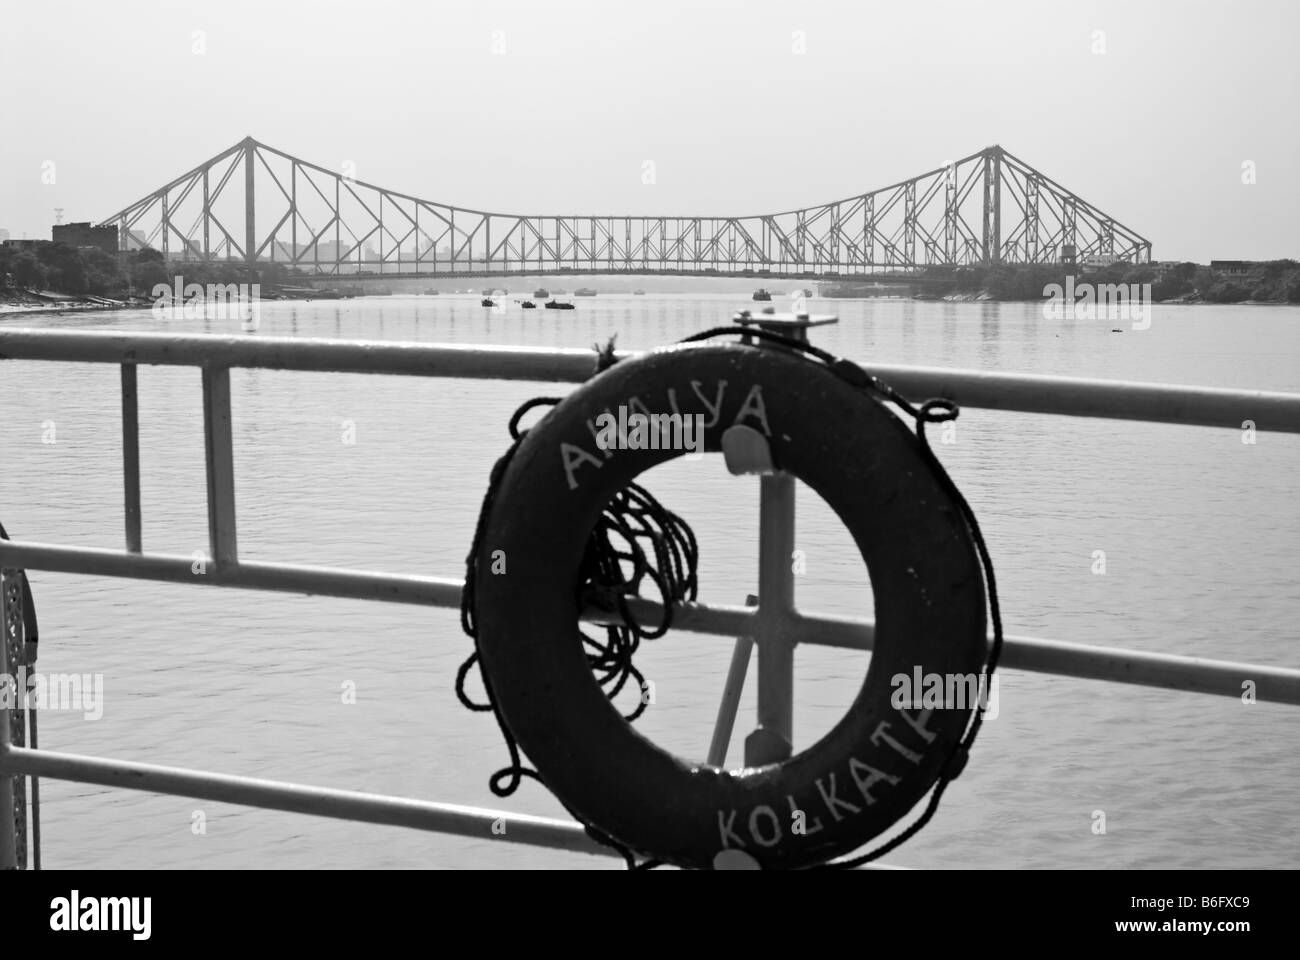 Kolkata. The Howrah Bridge, seen from M.V. Ahalya on the River Hooghly Stock Photo